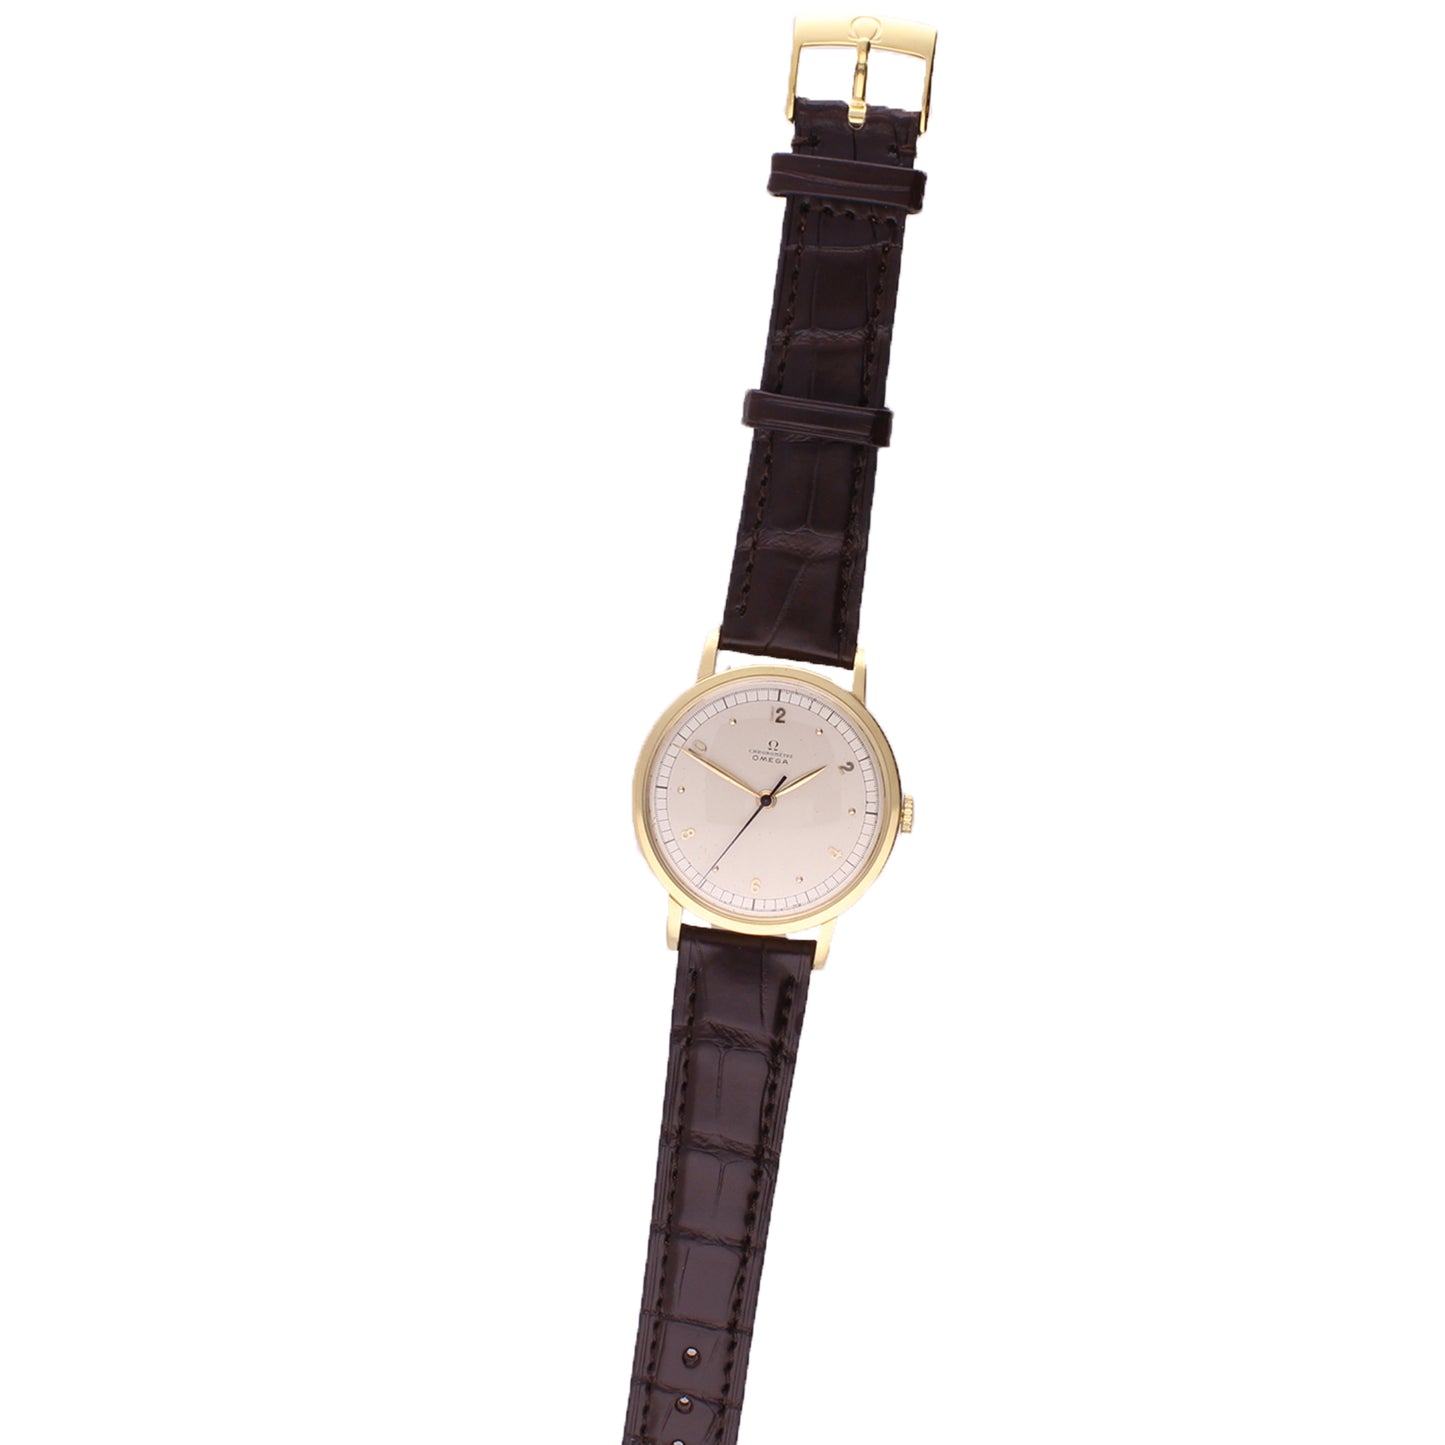 18ct yellow gold OMEGA  'Oversized' chronometer wristwatch. Made 1949